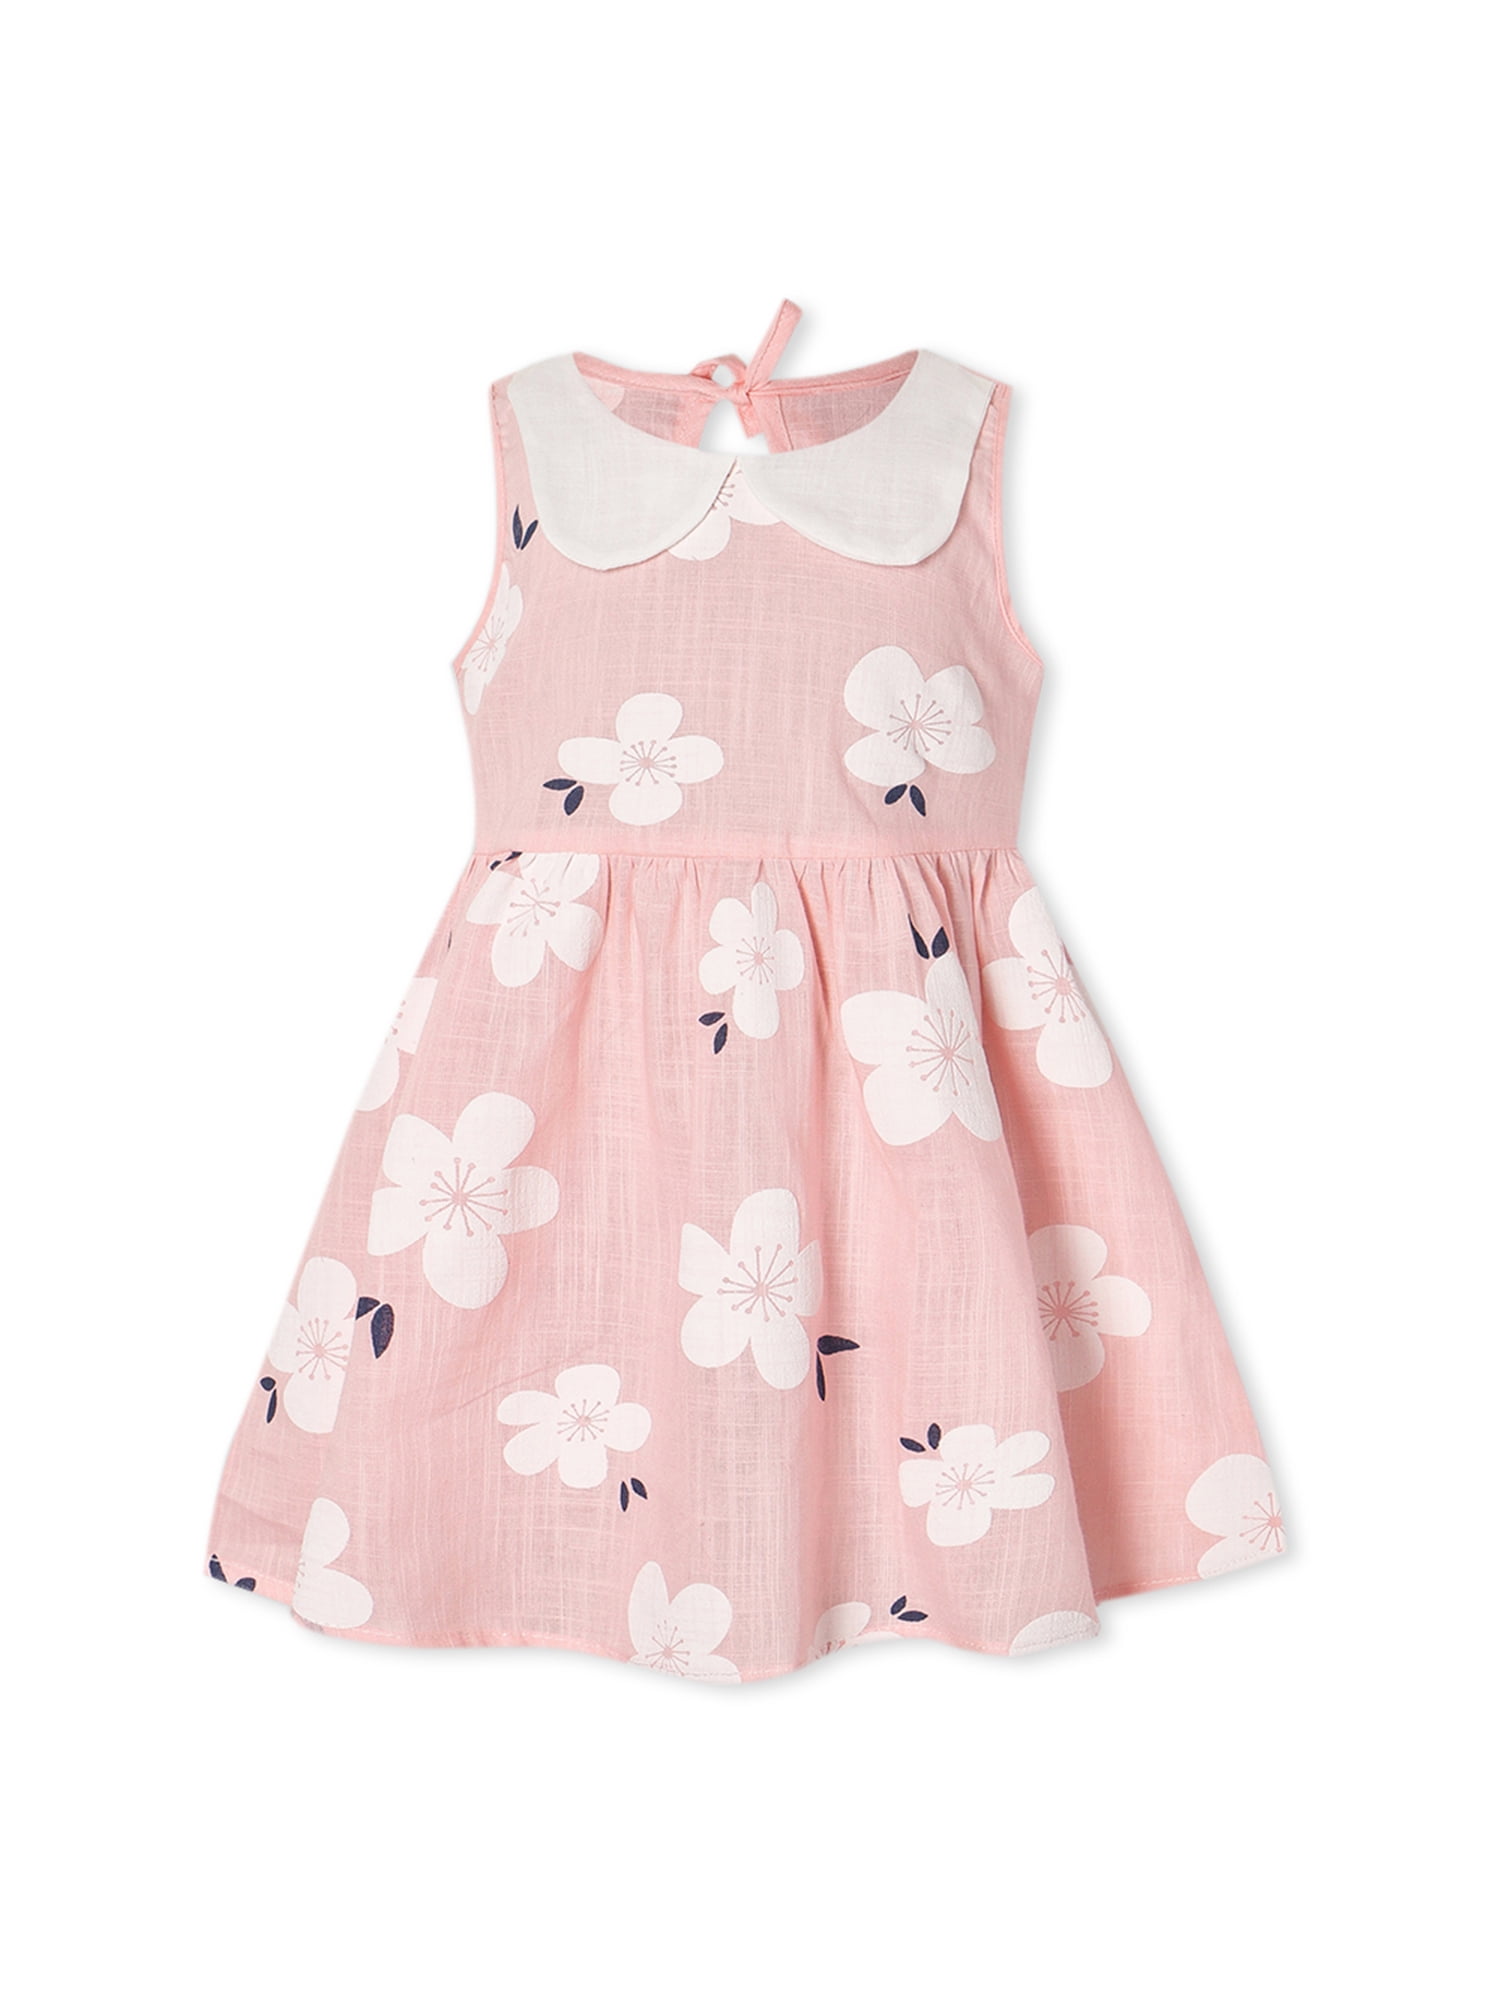 Handknitted Girl Baby Summer Dress Cotton Baby Knit Frilled Dress Gift for Baby Girl Love Heart Pink Summer Sleeveless Dress